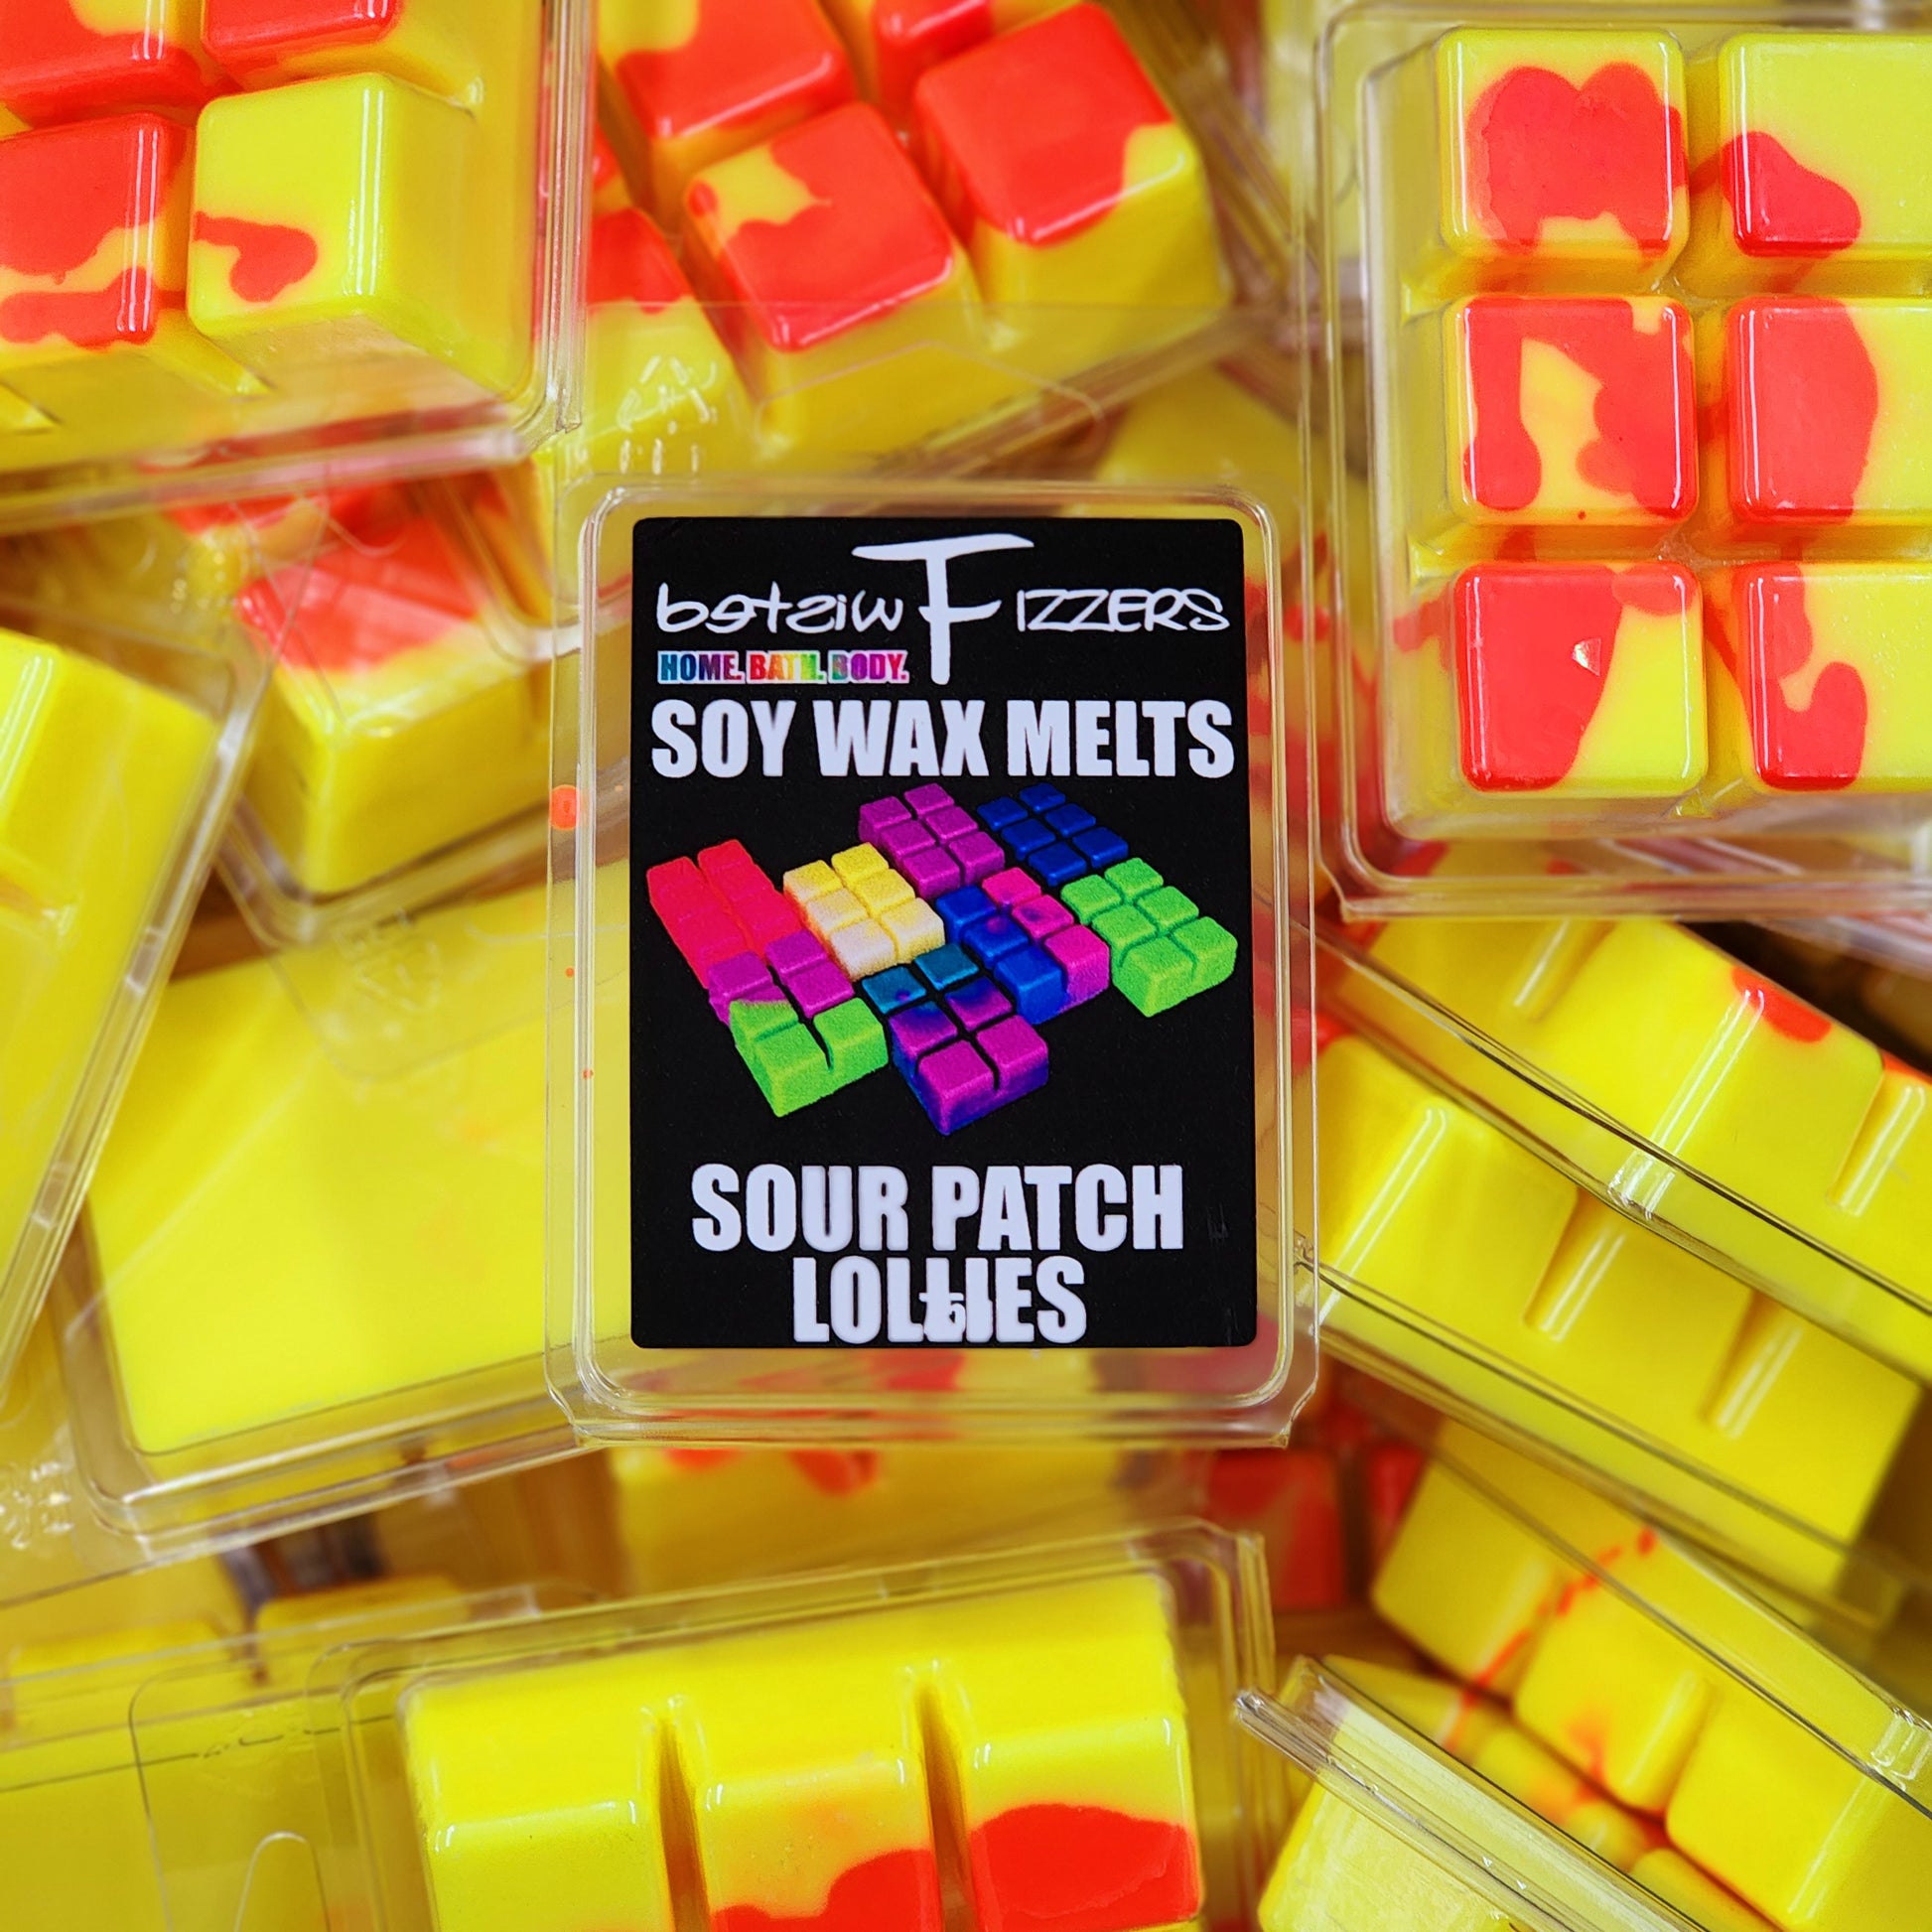 Sour patch Lollies Soy Wax Melts